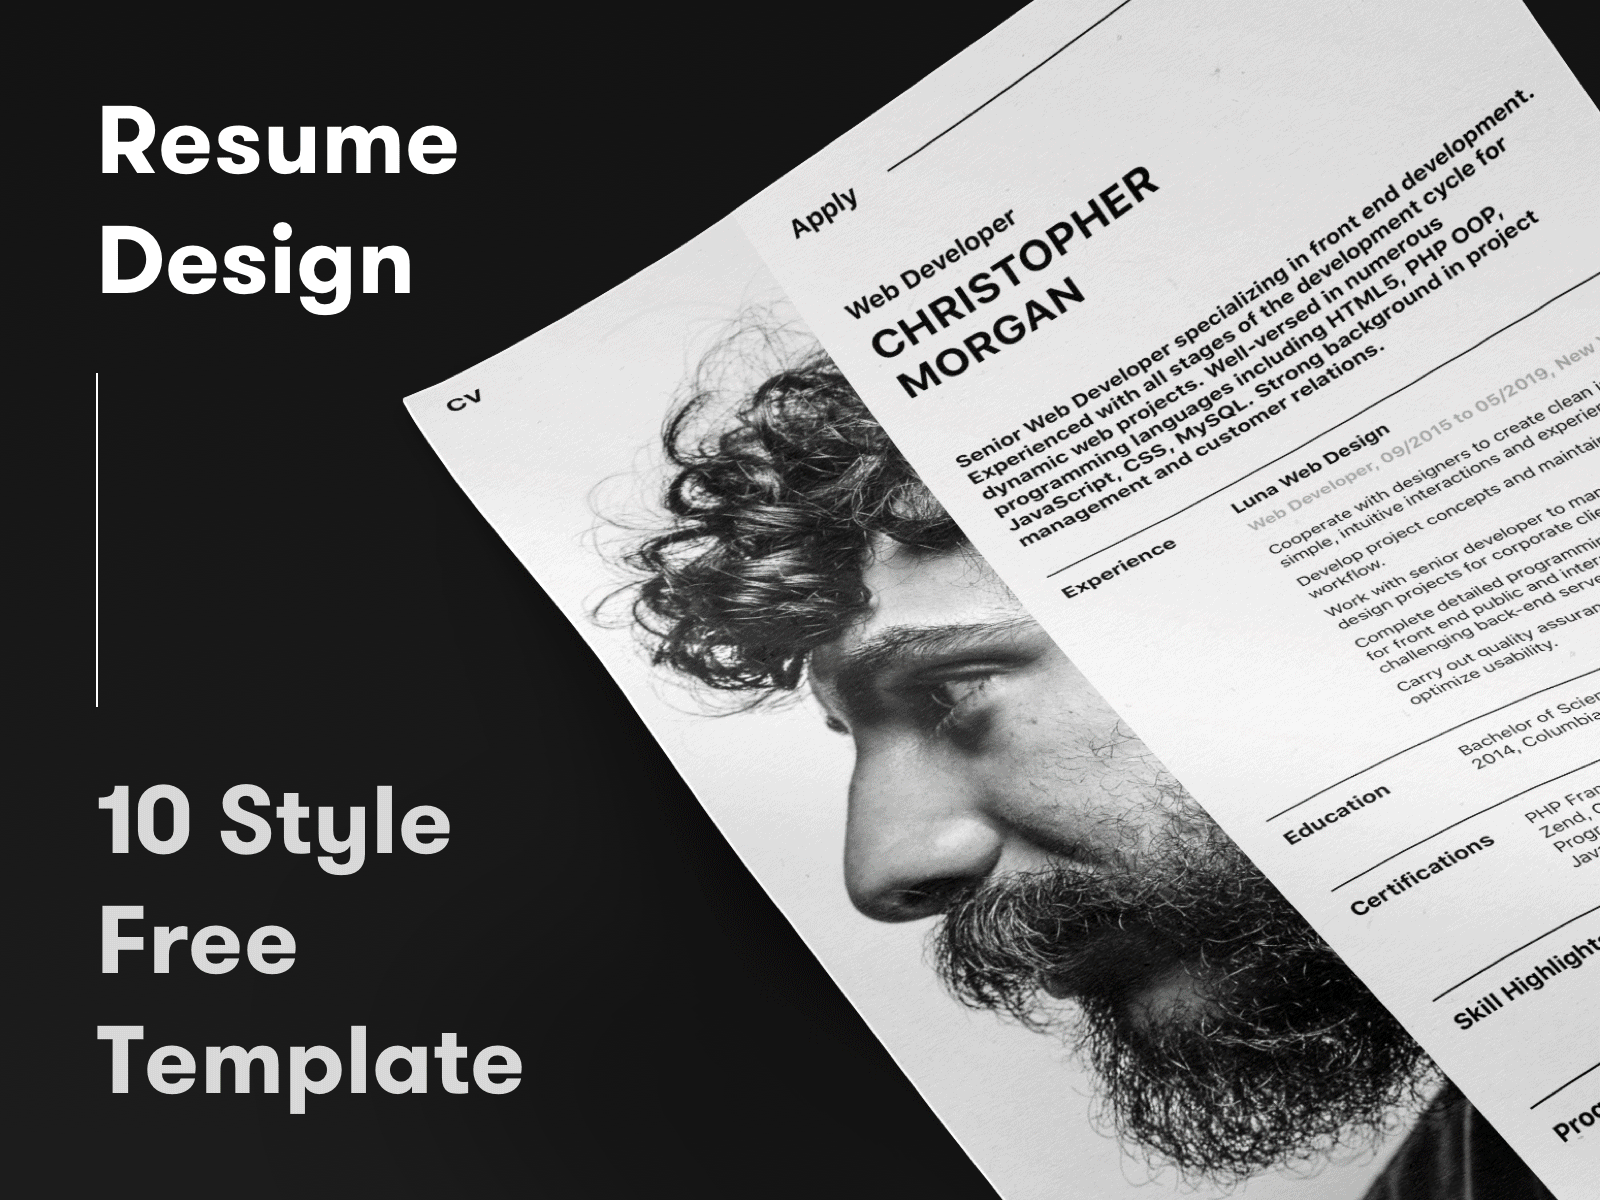 Resume Design - 10 Style Free Template adobe xd adobexd cv free resume resume cv sketch template xd